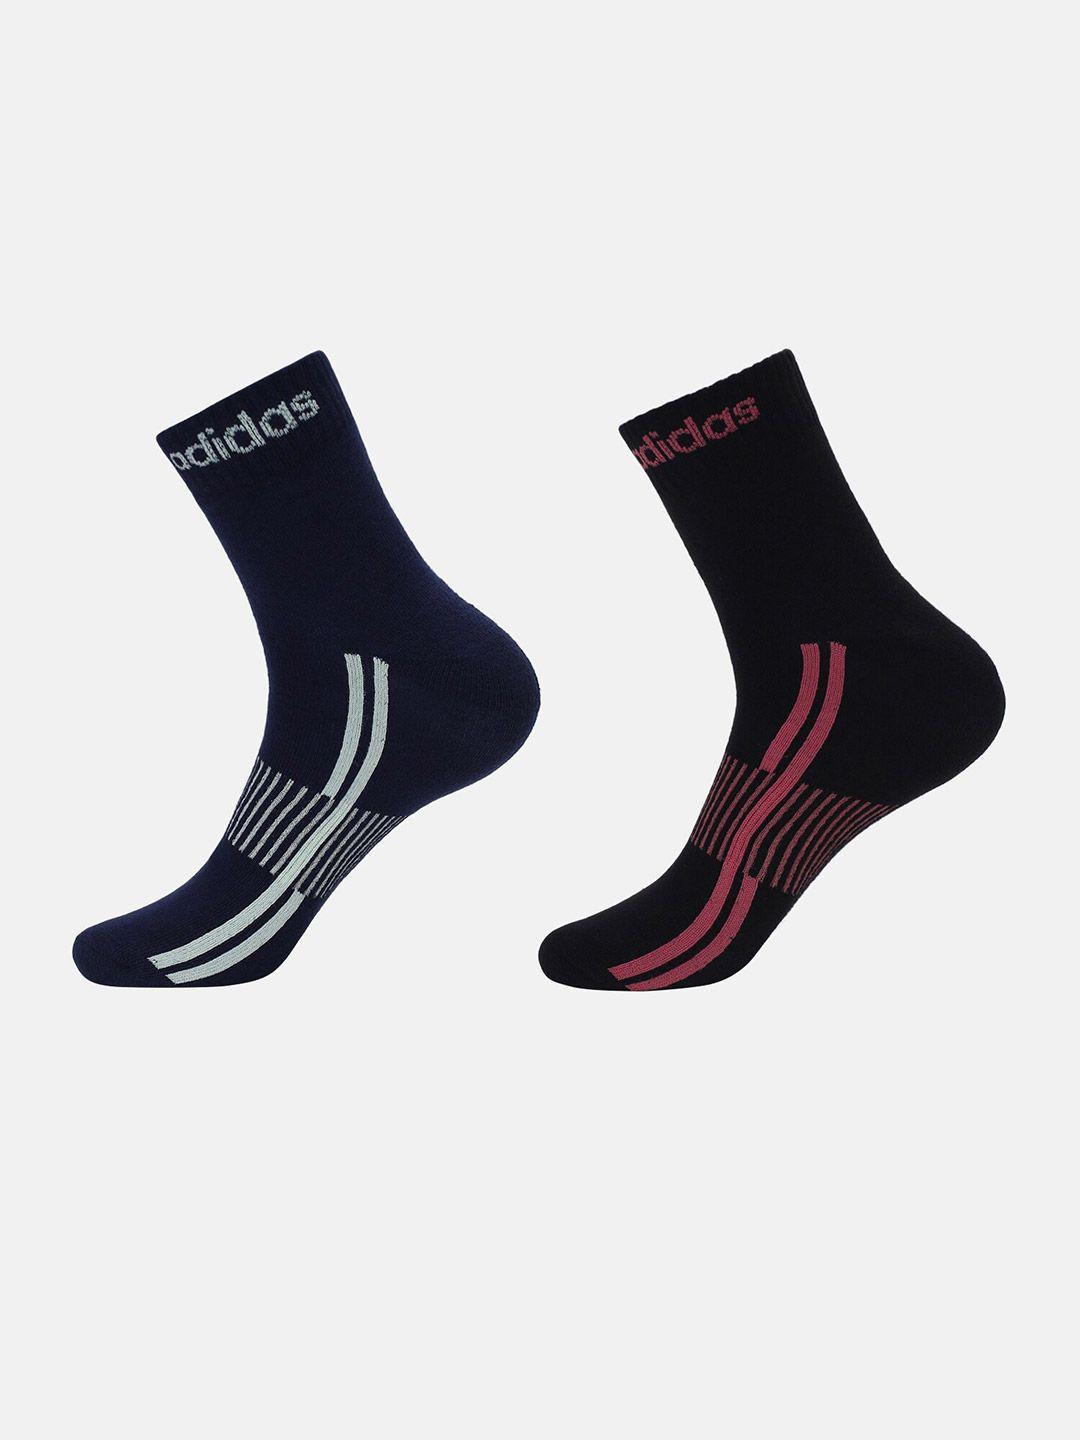 adidas-men-pack-of-2-patterned-calf-length-socks